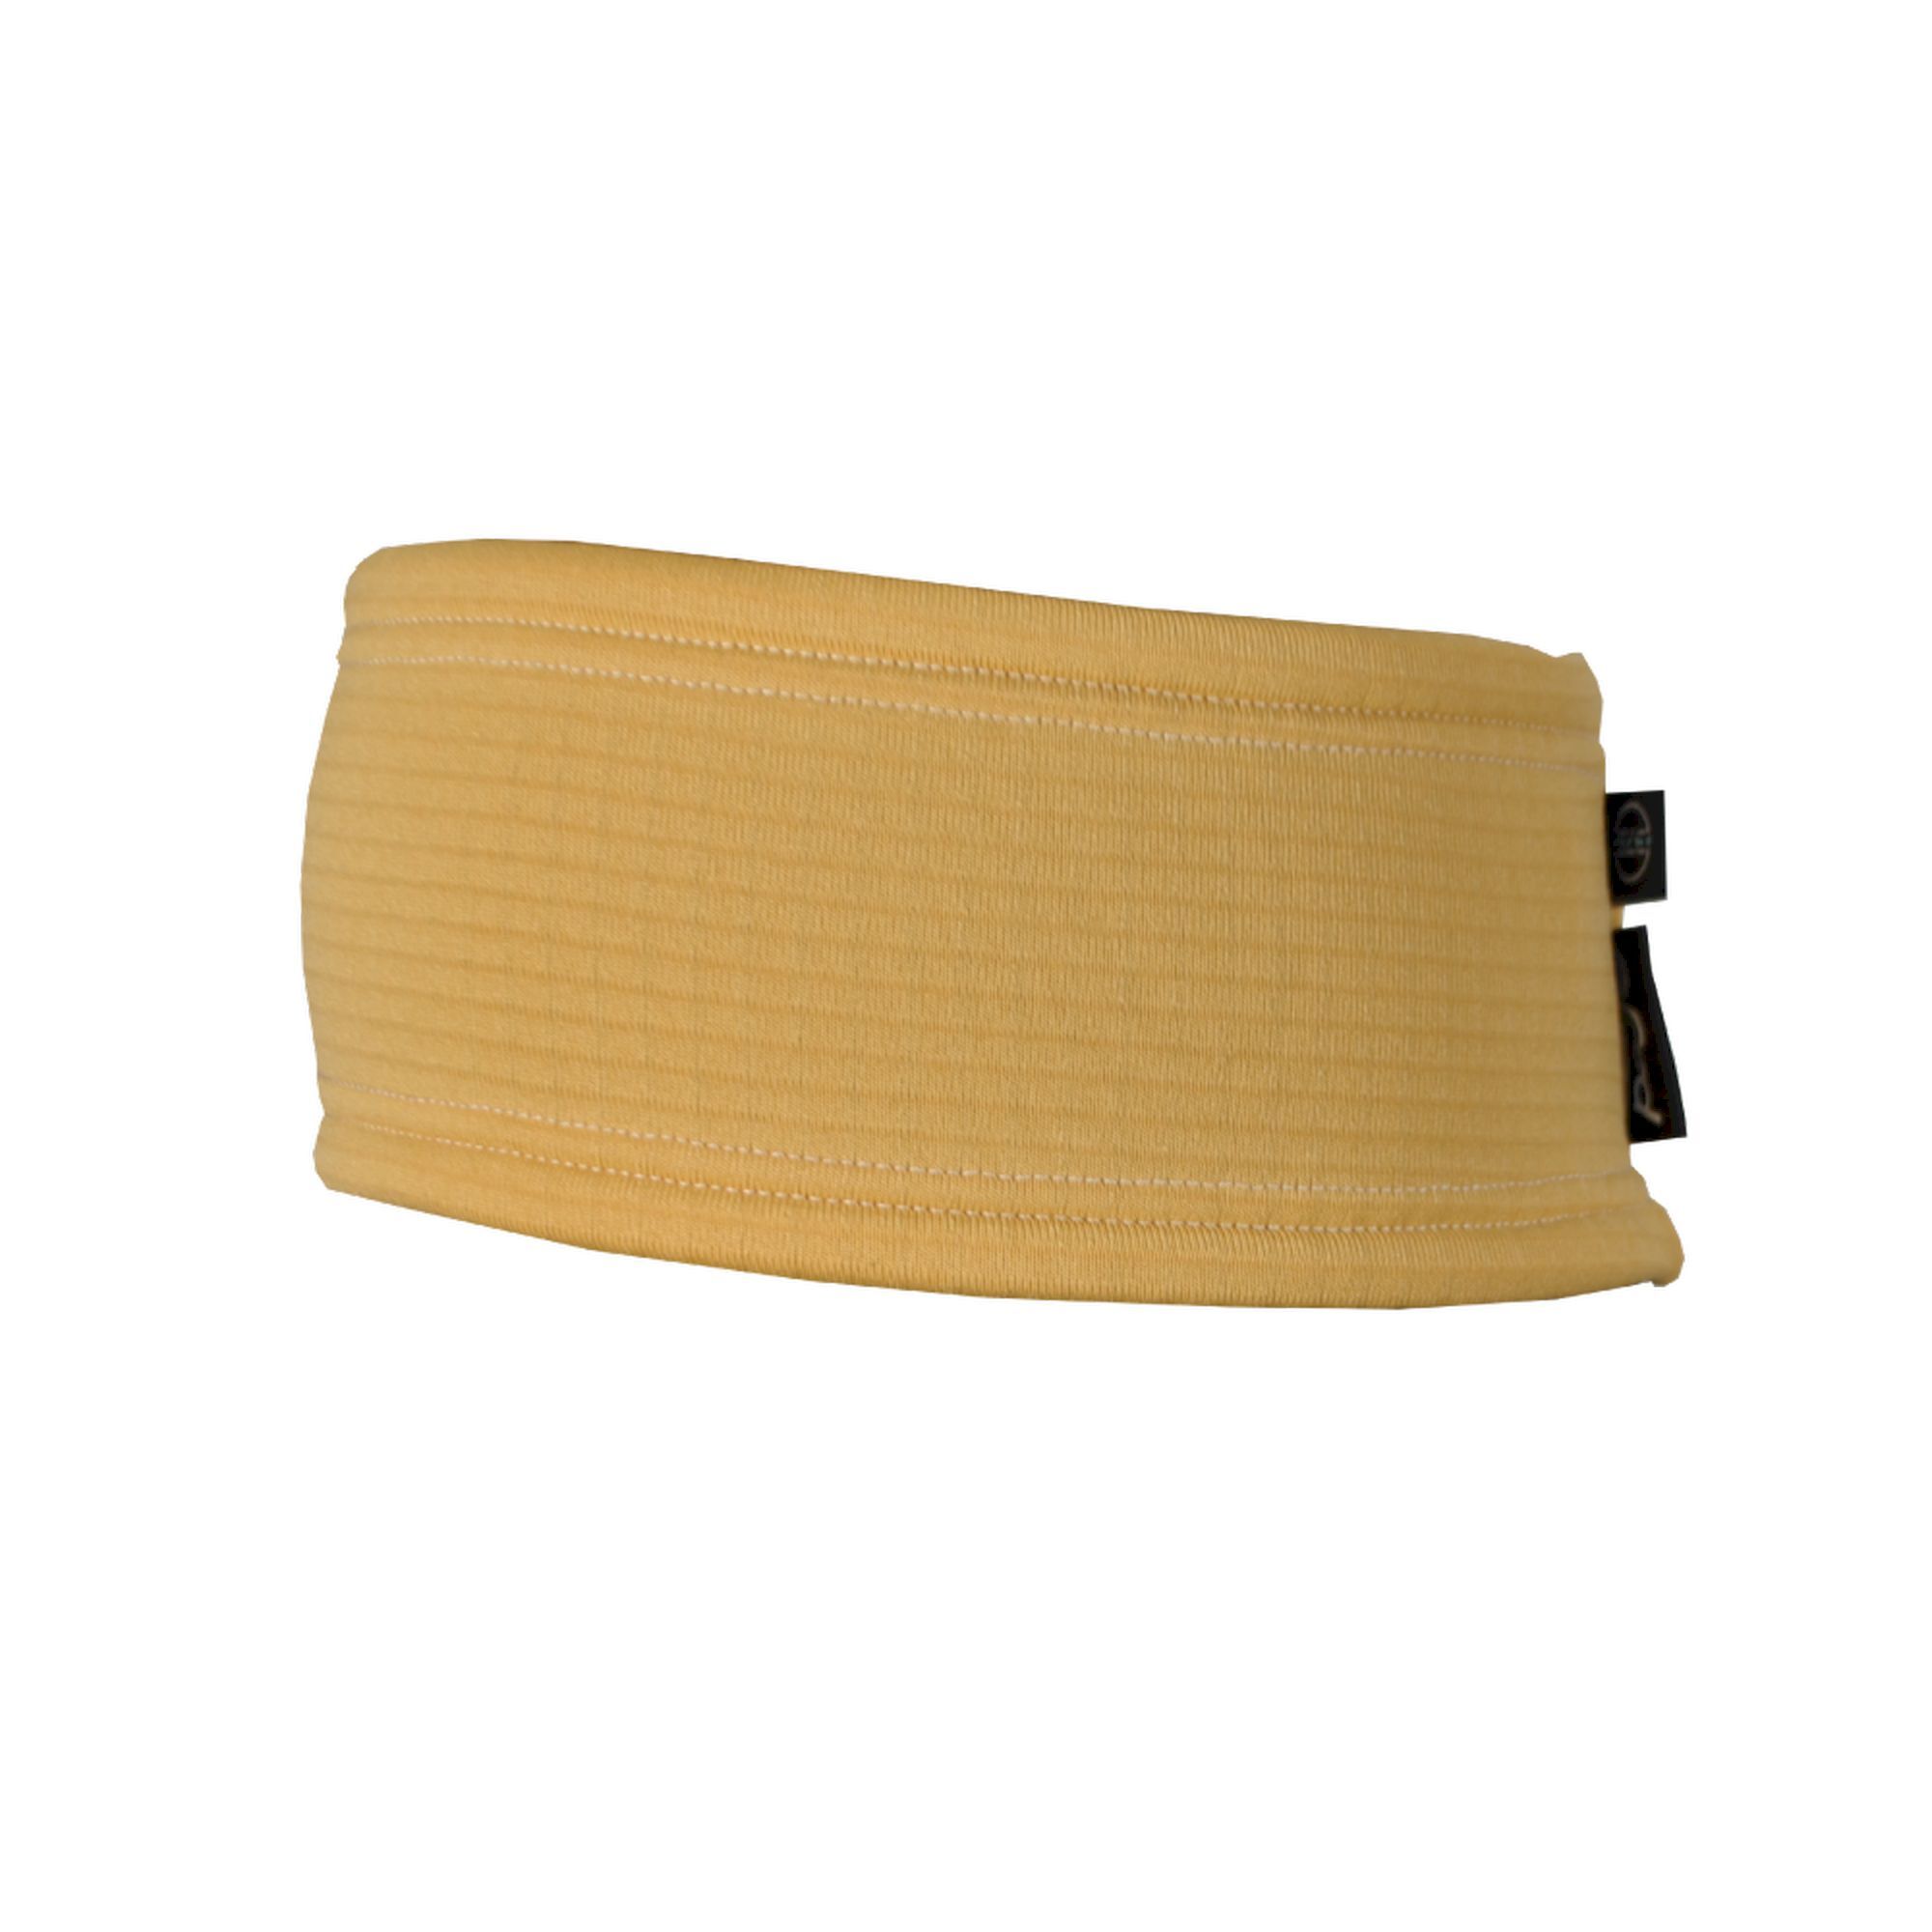 PAG Neckwear Headband - Pannband